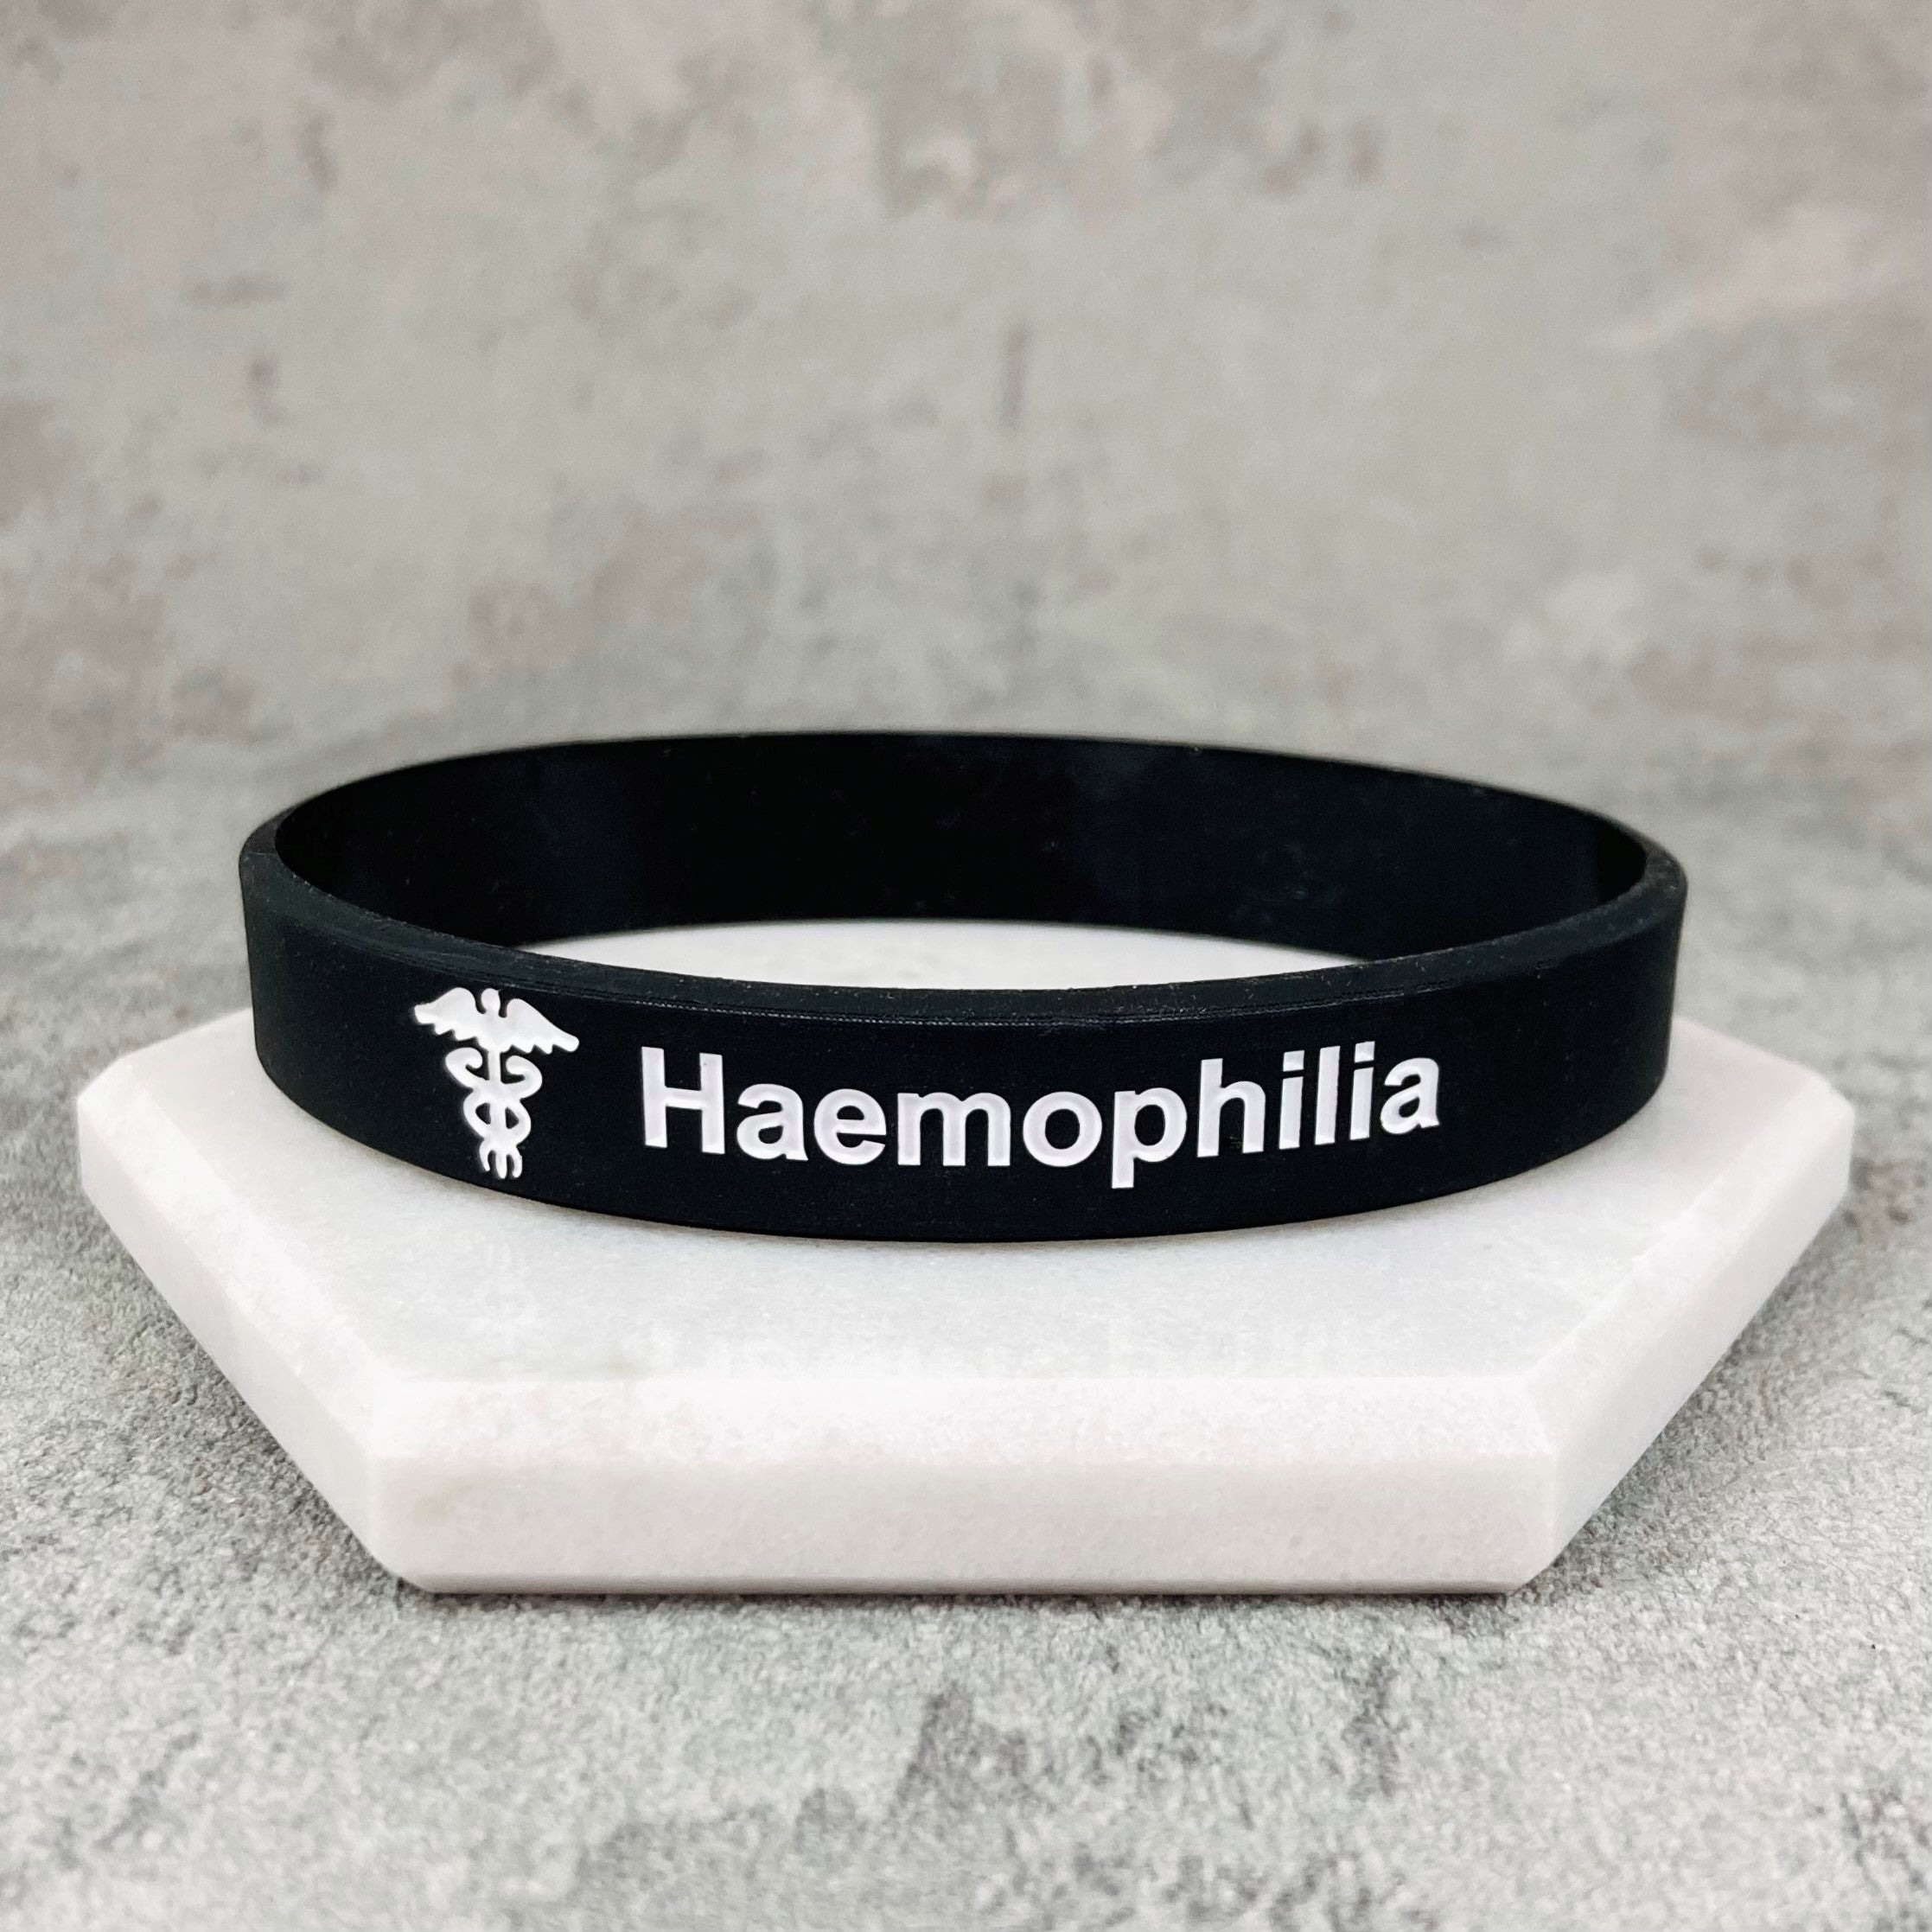 Haemophilia medical alert bracelet